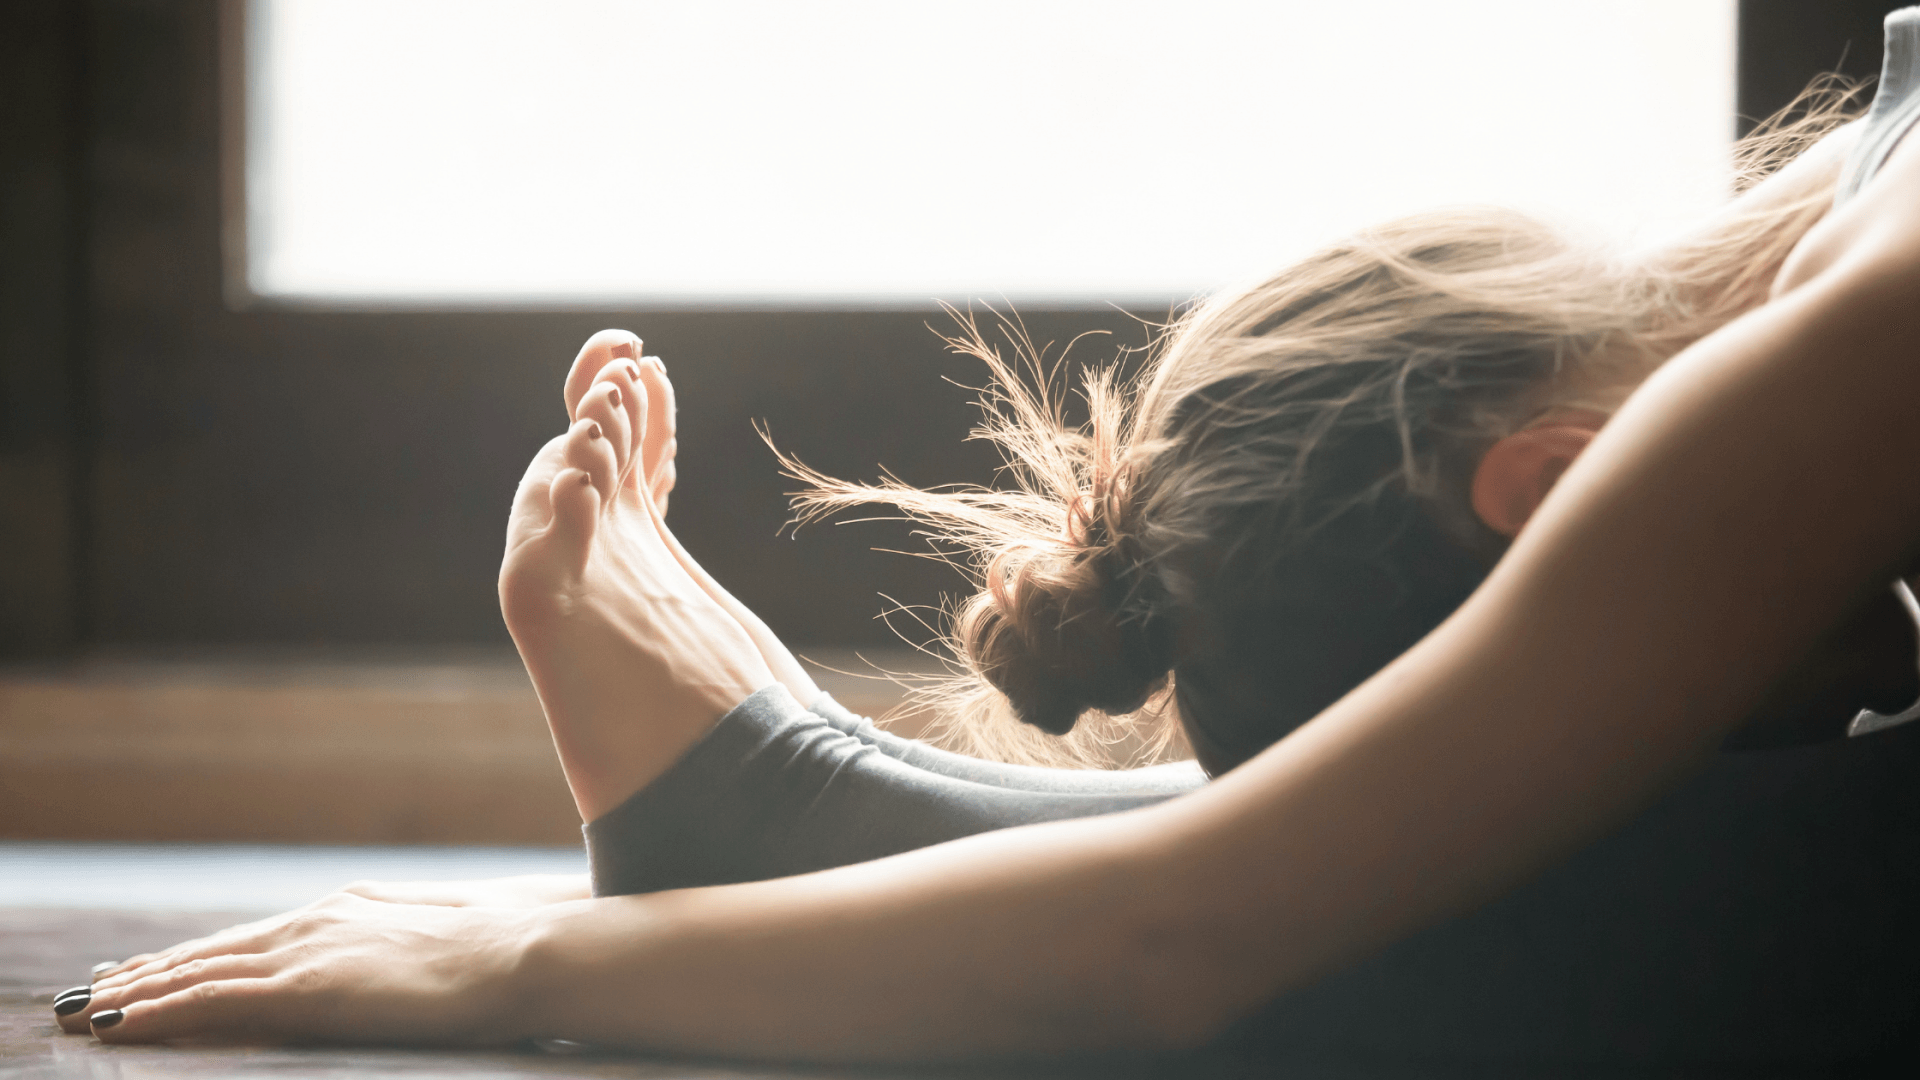 audio video installation - woman doing yoga